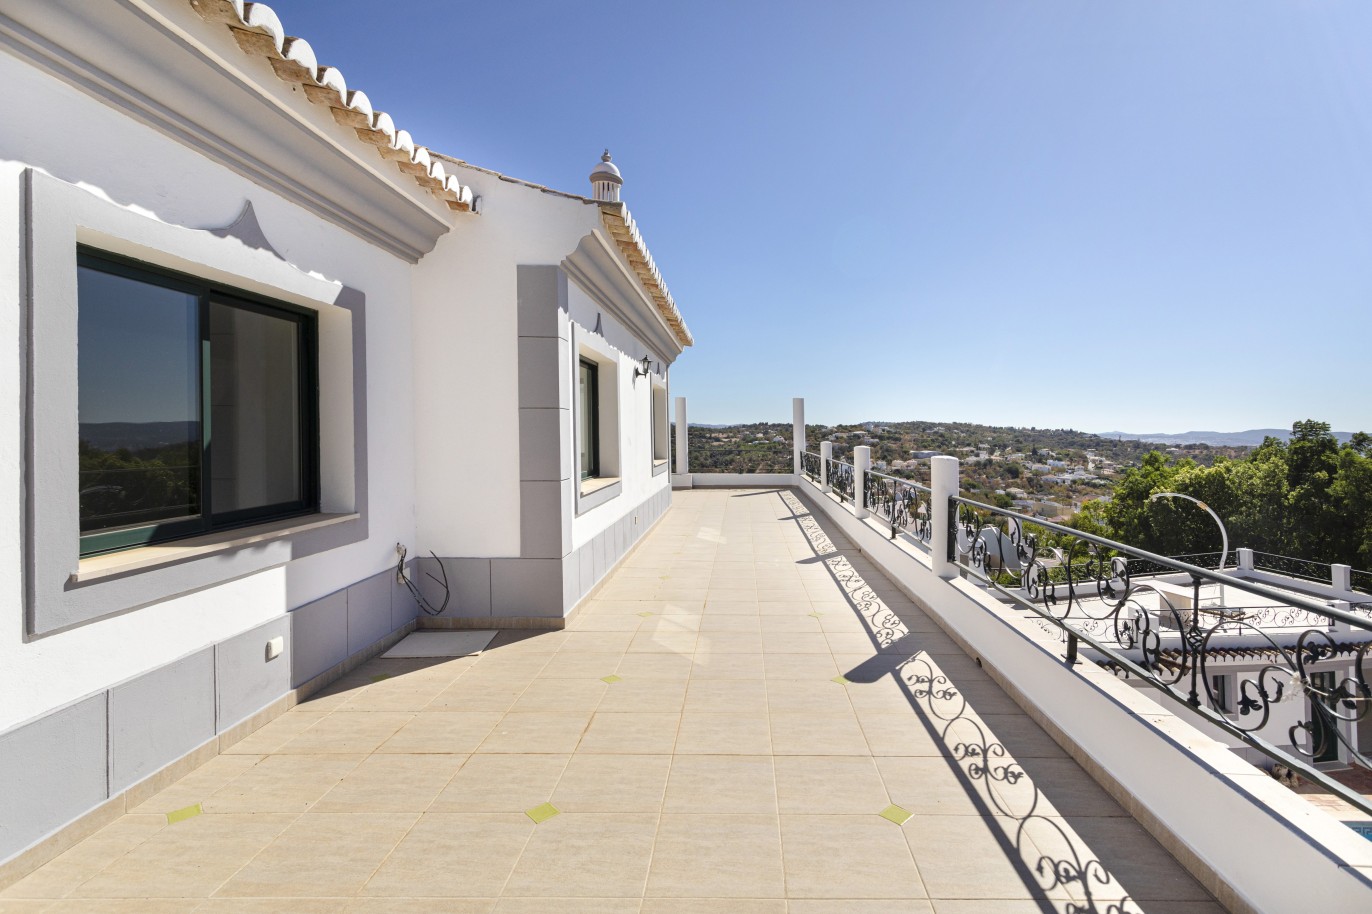 Villa zum Verkauf mit pool, Meer-und Bergblick, Loulé, Algarve, Portugal_236419